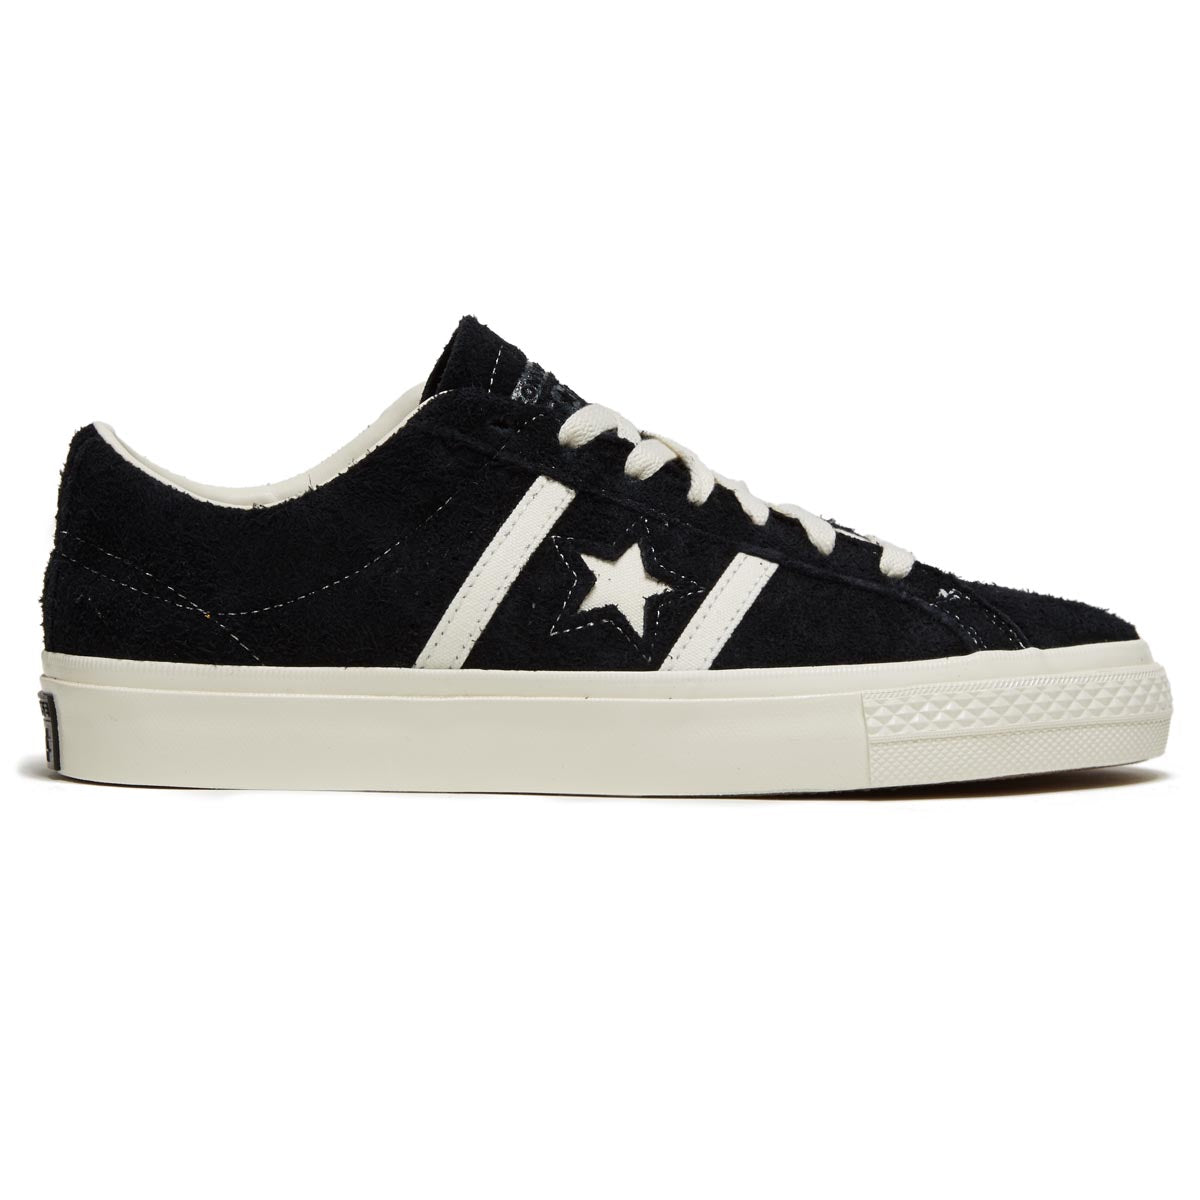 Converse One Star Academy Pro Suede Ox Shoes - Black/Egret/Egret image 1